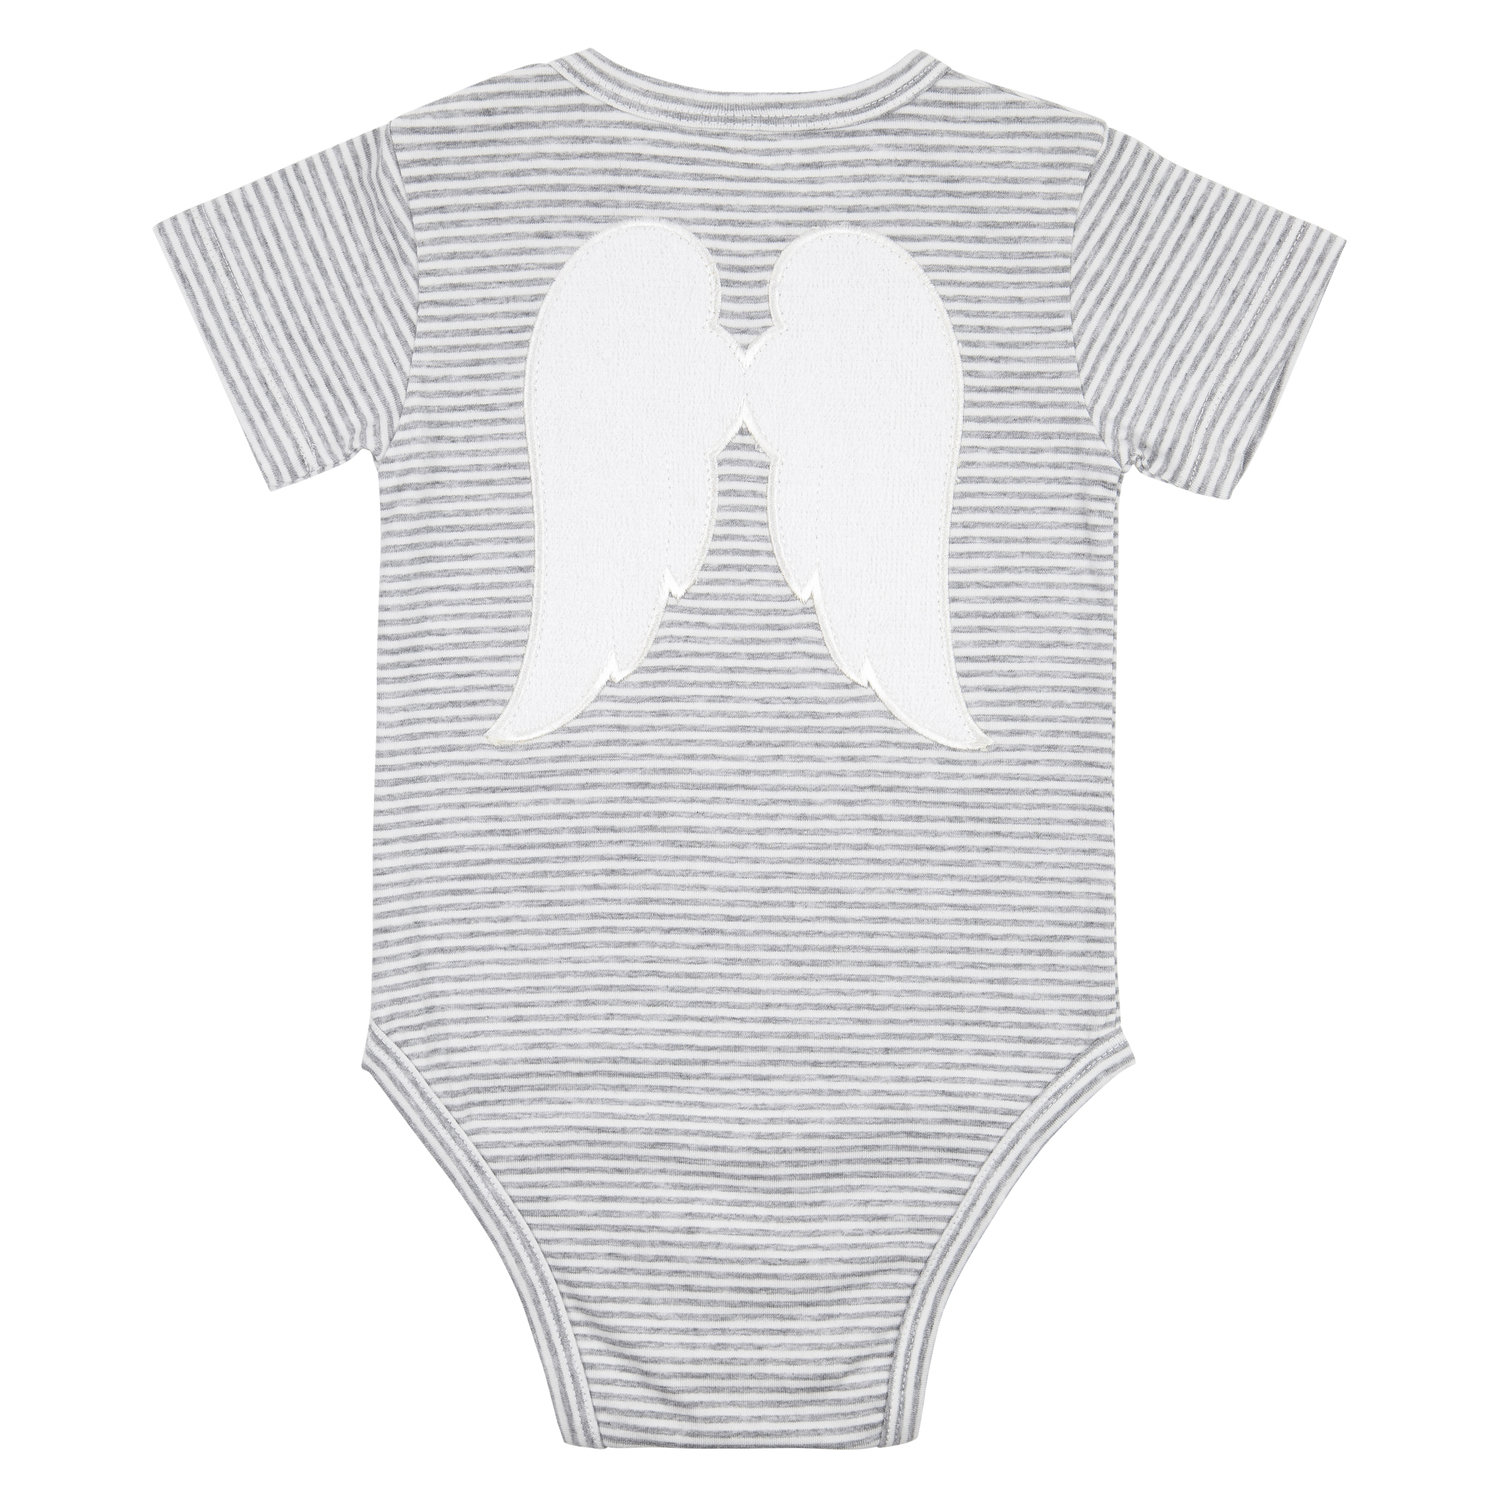 Baby Angel Playsuit Grey Striped